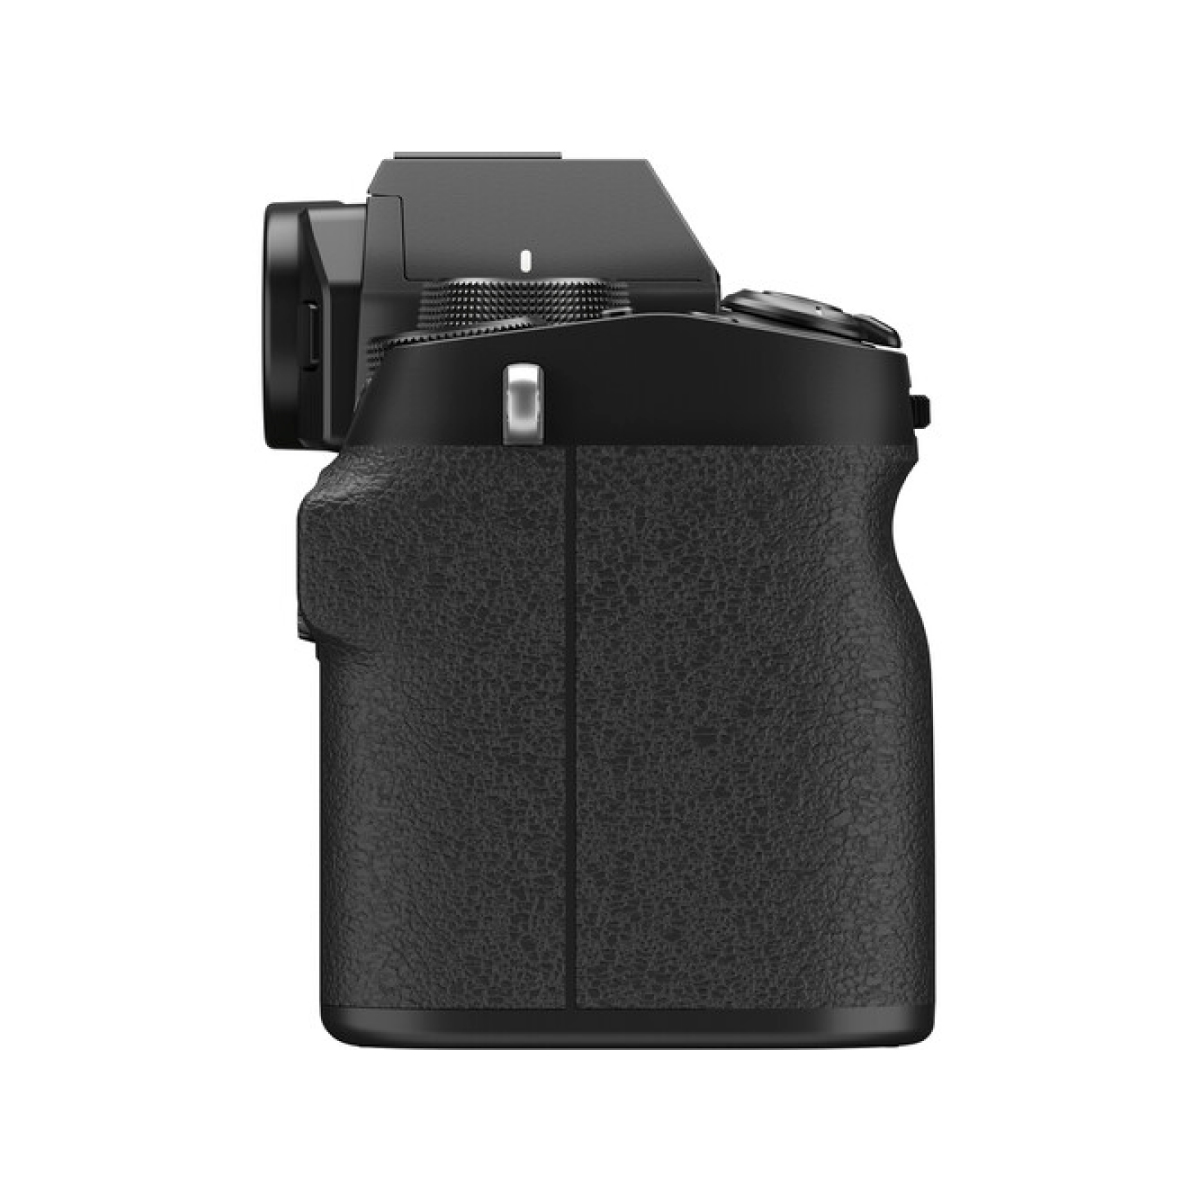 Fujifilm X-S10 Mirrorless Camera Body – Black (8)